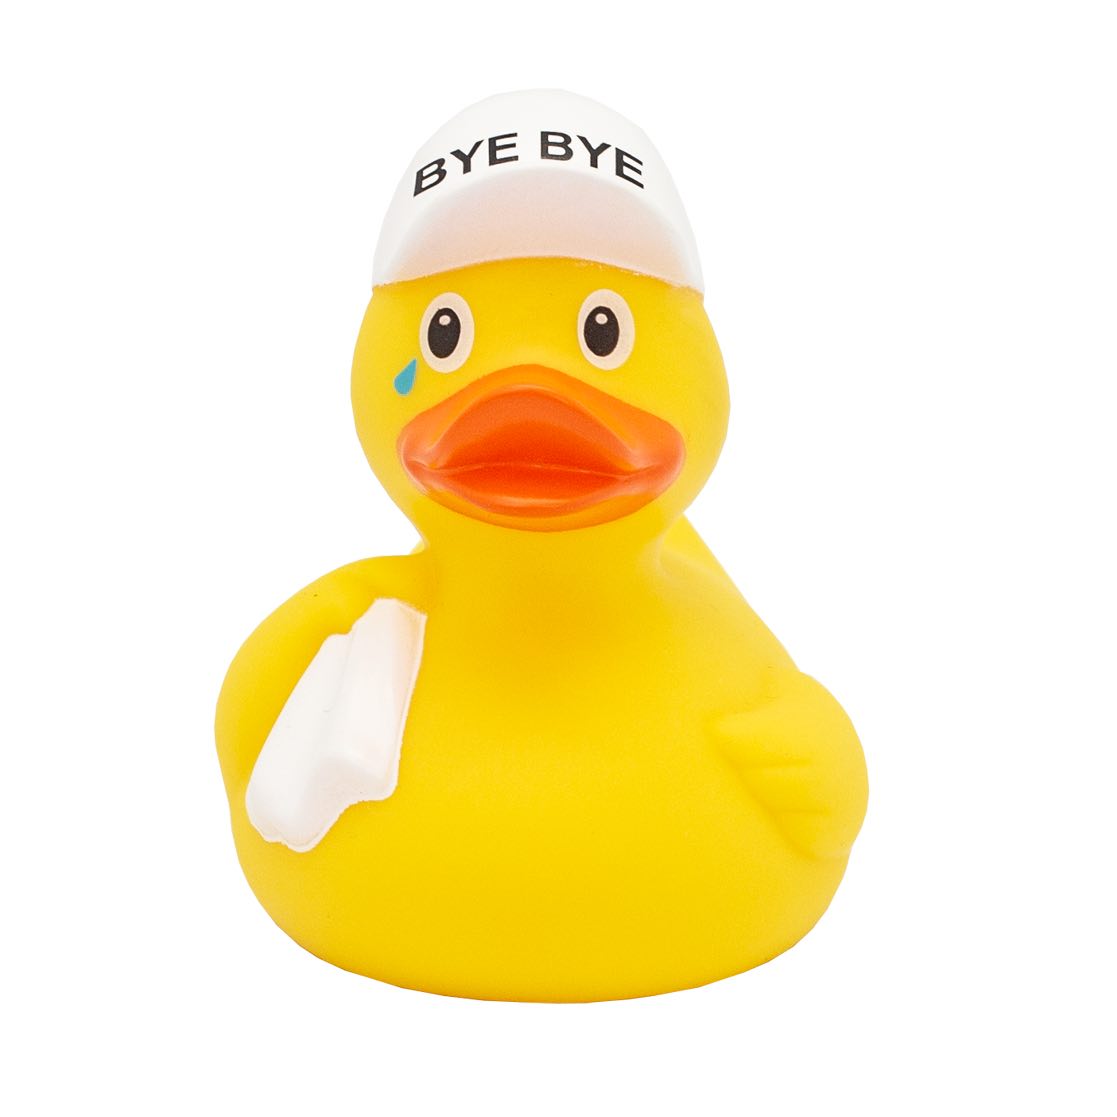 http://amsterdamduckstore.com/wp-content/uploads/2022/07/Bye-Bye-Rubber-Duck-front-Amsterdam-Duck-Store.jpg